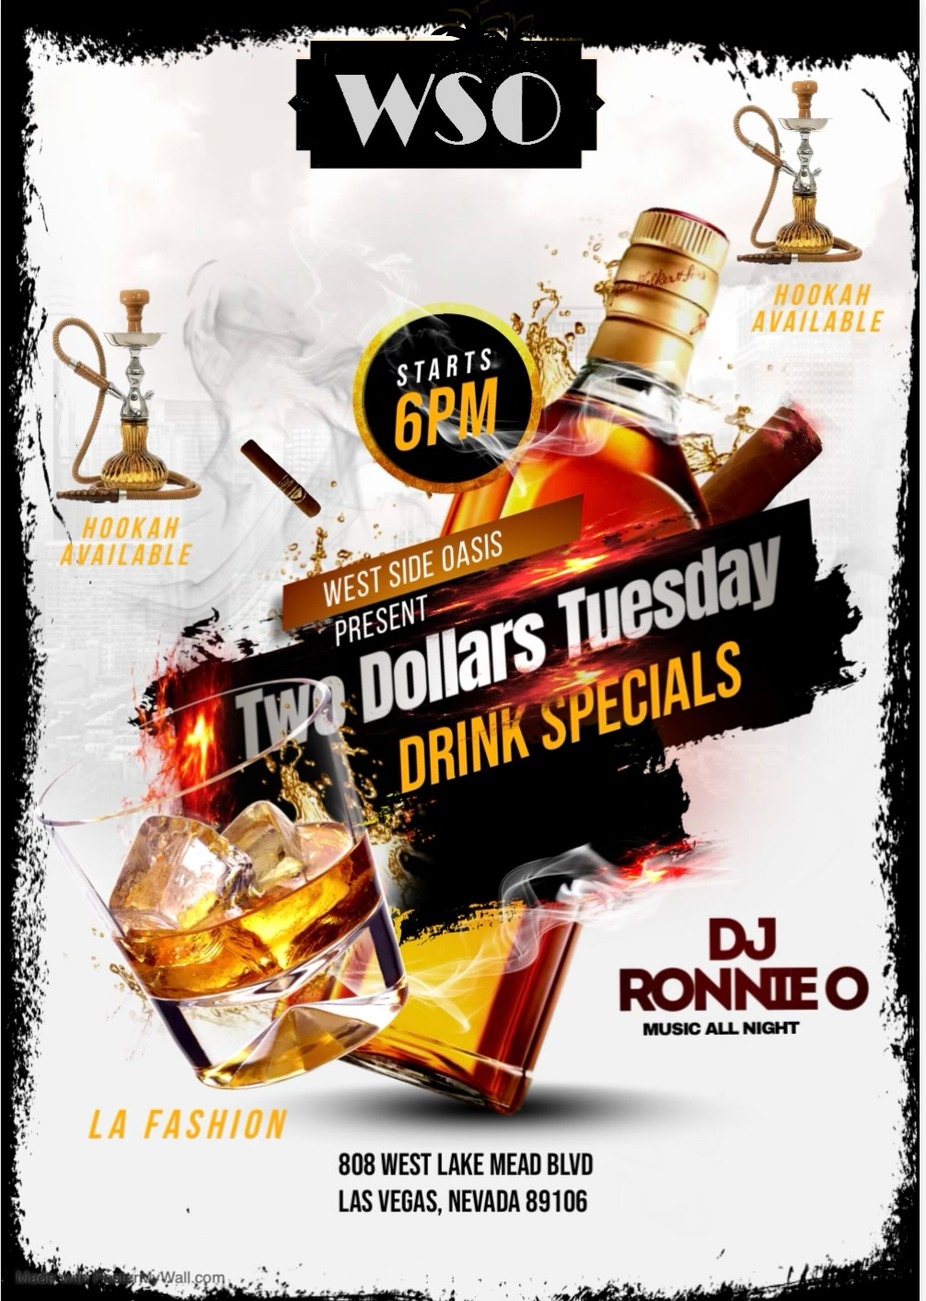 $2 Tuesday with Dj Ronnie-o event photo